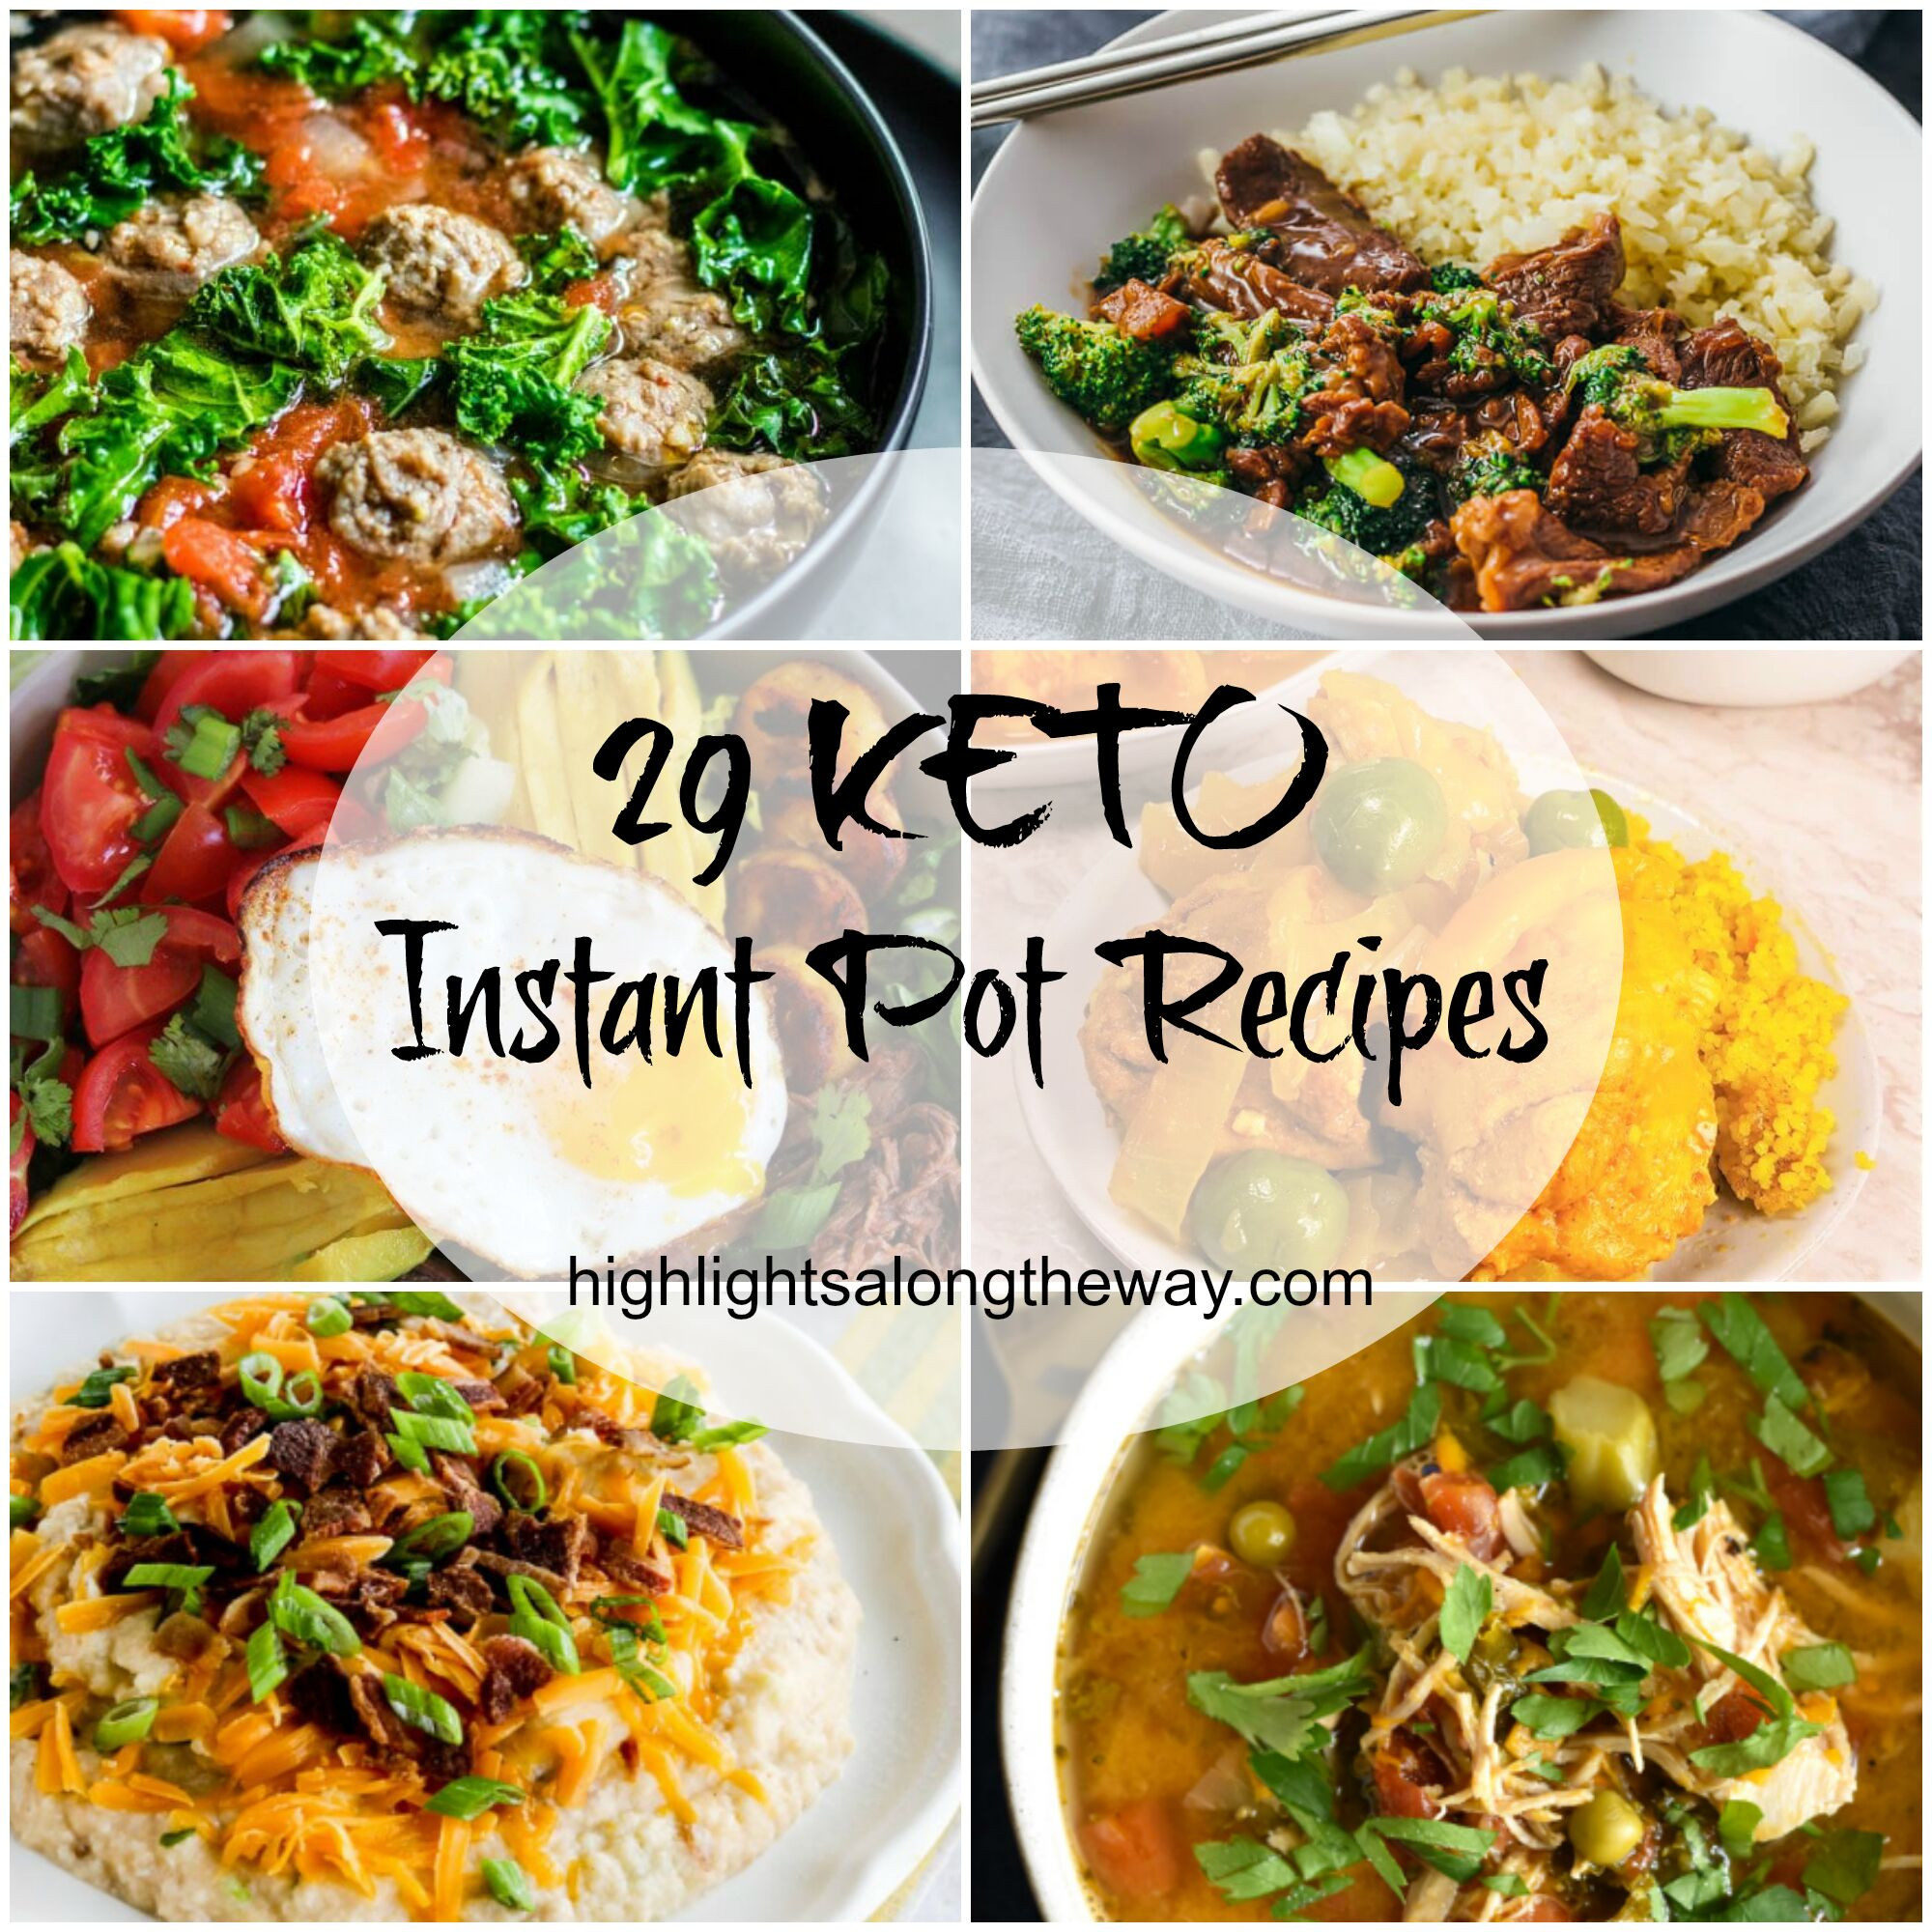 Keto Dinner Recipes Instant Pot
 Easy Keto Instant Pot Recipes Roundup of 29 Easy Keto